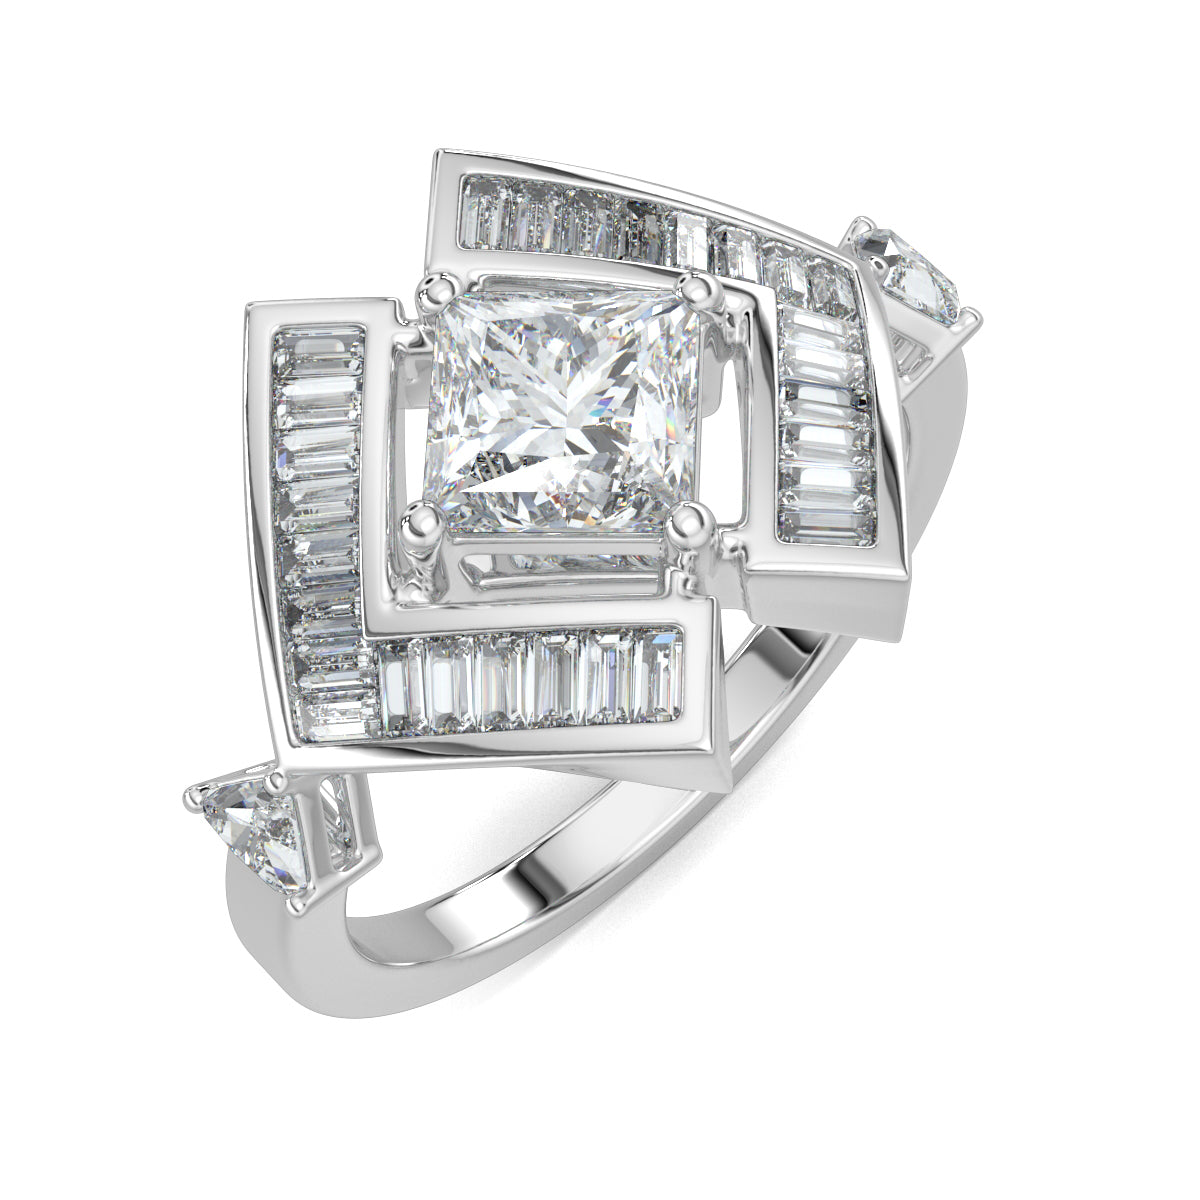 White Gold, Diamond Ring, allure princess ring, lab-grown diamonds, princess-cut diamond, natural diamonds, trillion diamonds, baguette diamonds, solitaire ring, diamond ring, elegant jewelry